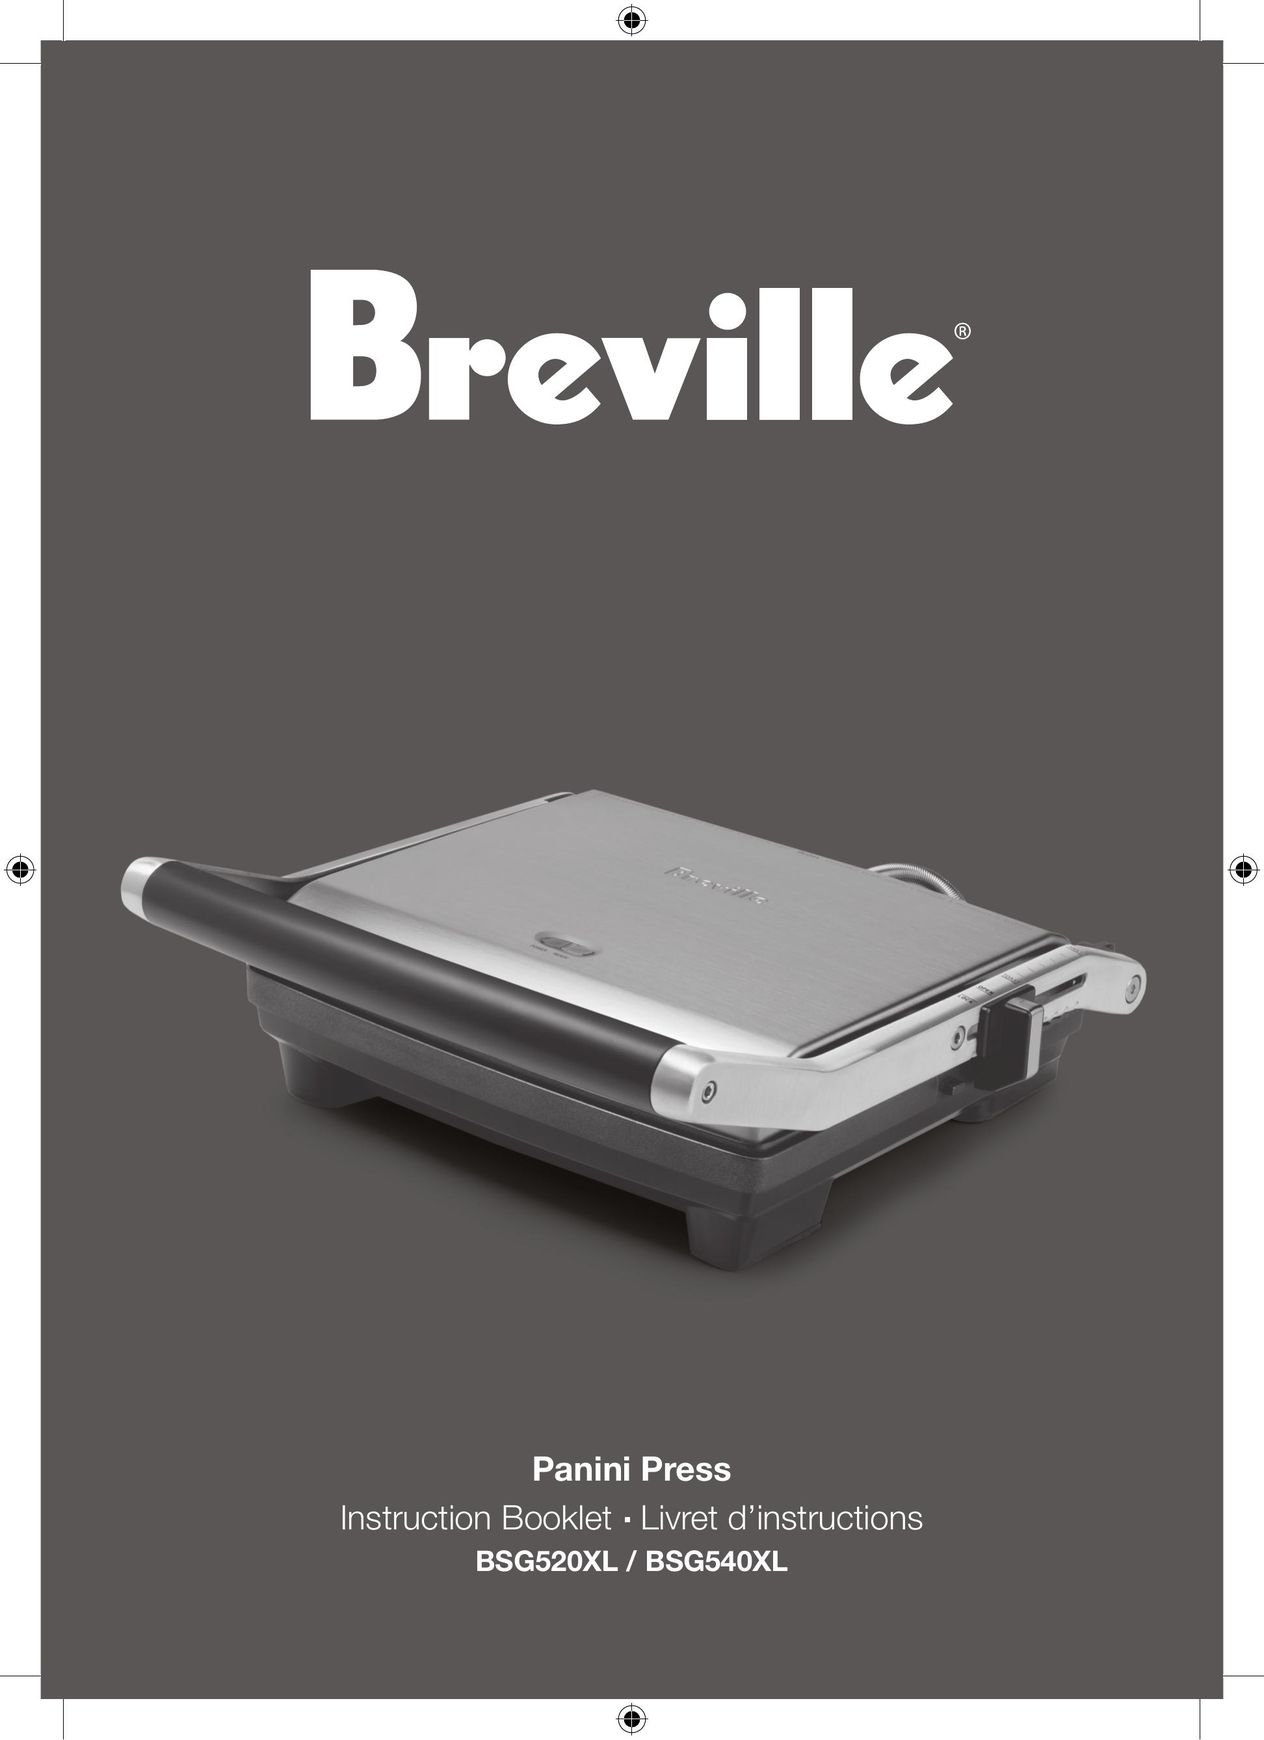 Breville BSG540XL Kitchen Grill User Manual